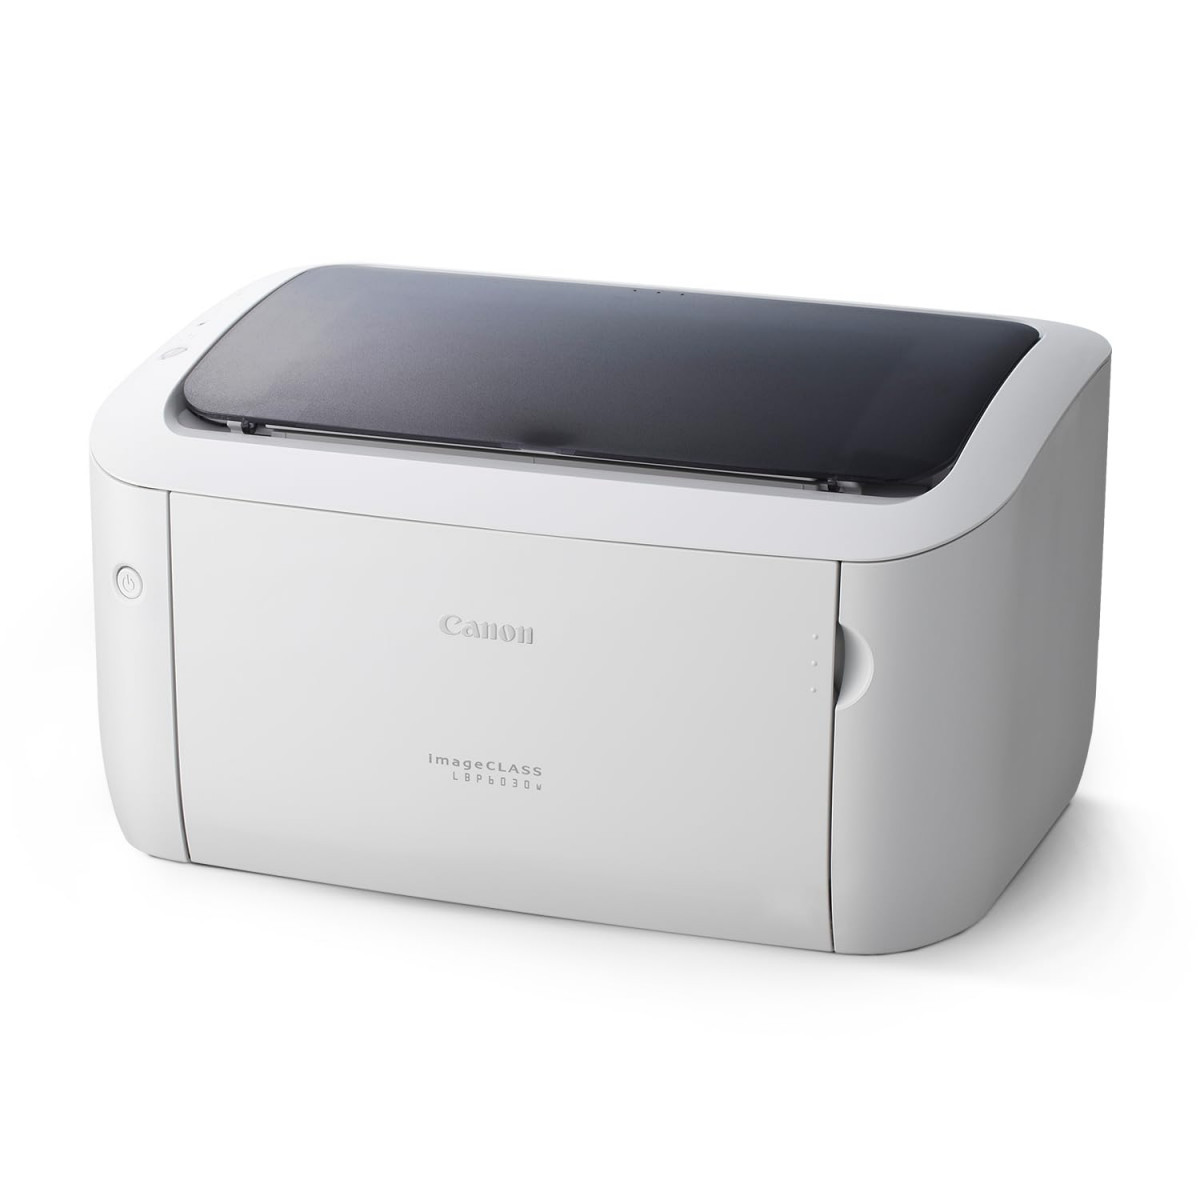 Canon imageCLASS LBP6030W Wi-Fi Mono Printer Windows Mac and Linux Support